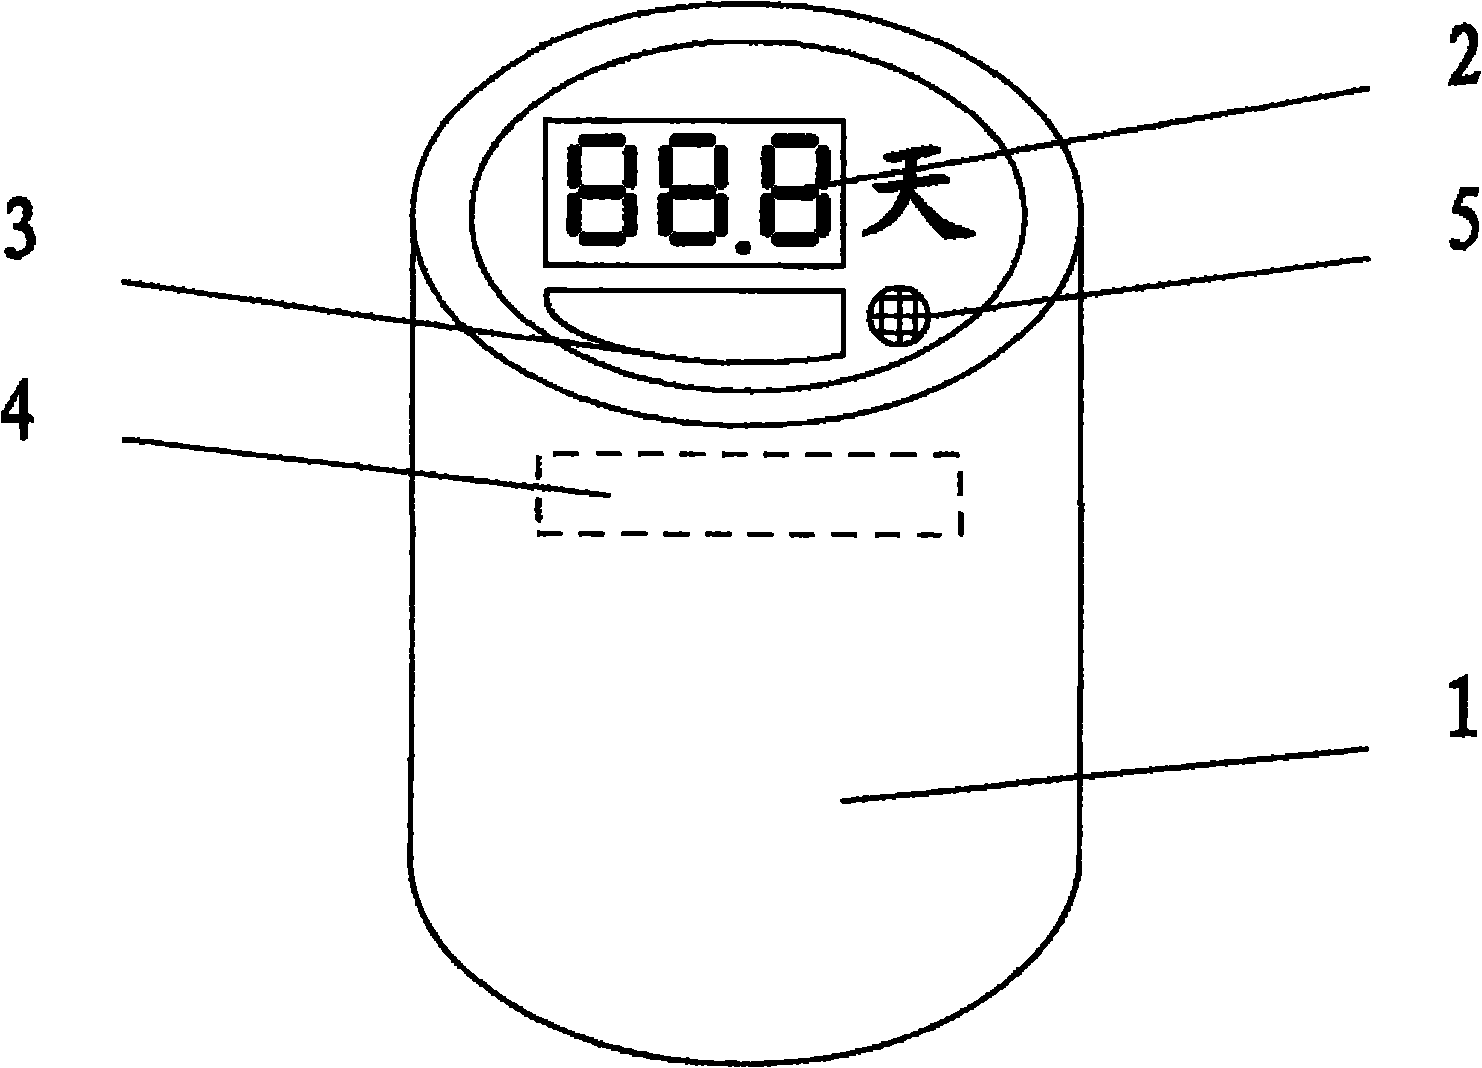 Electronic bottle cap